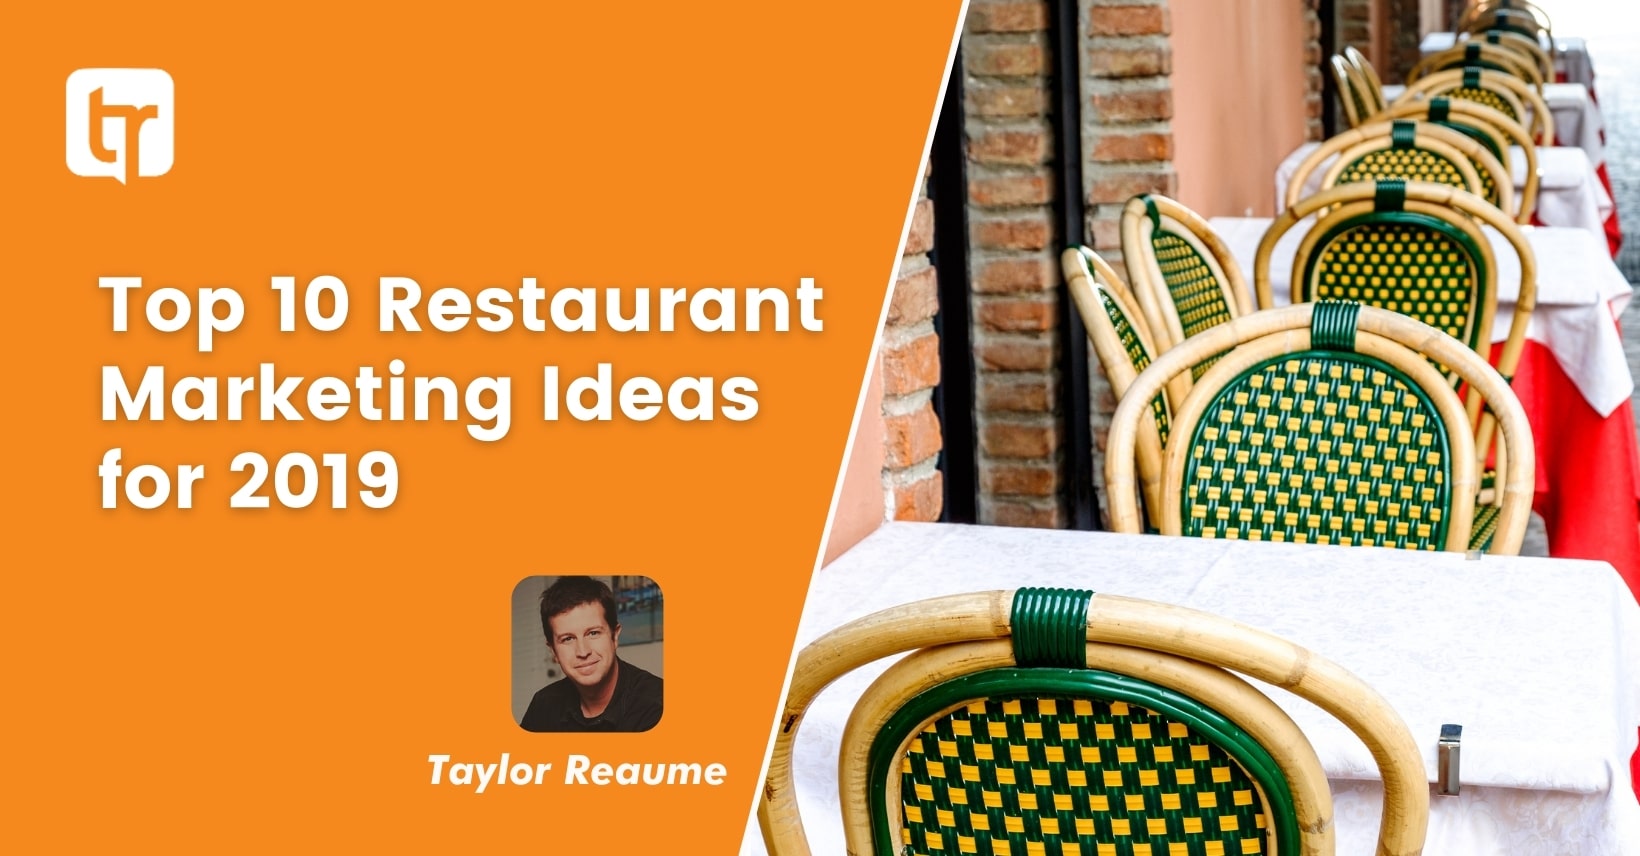 Top 10 Restaurant Marketing Ideas for 2019